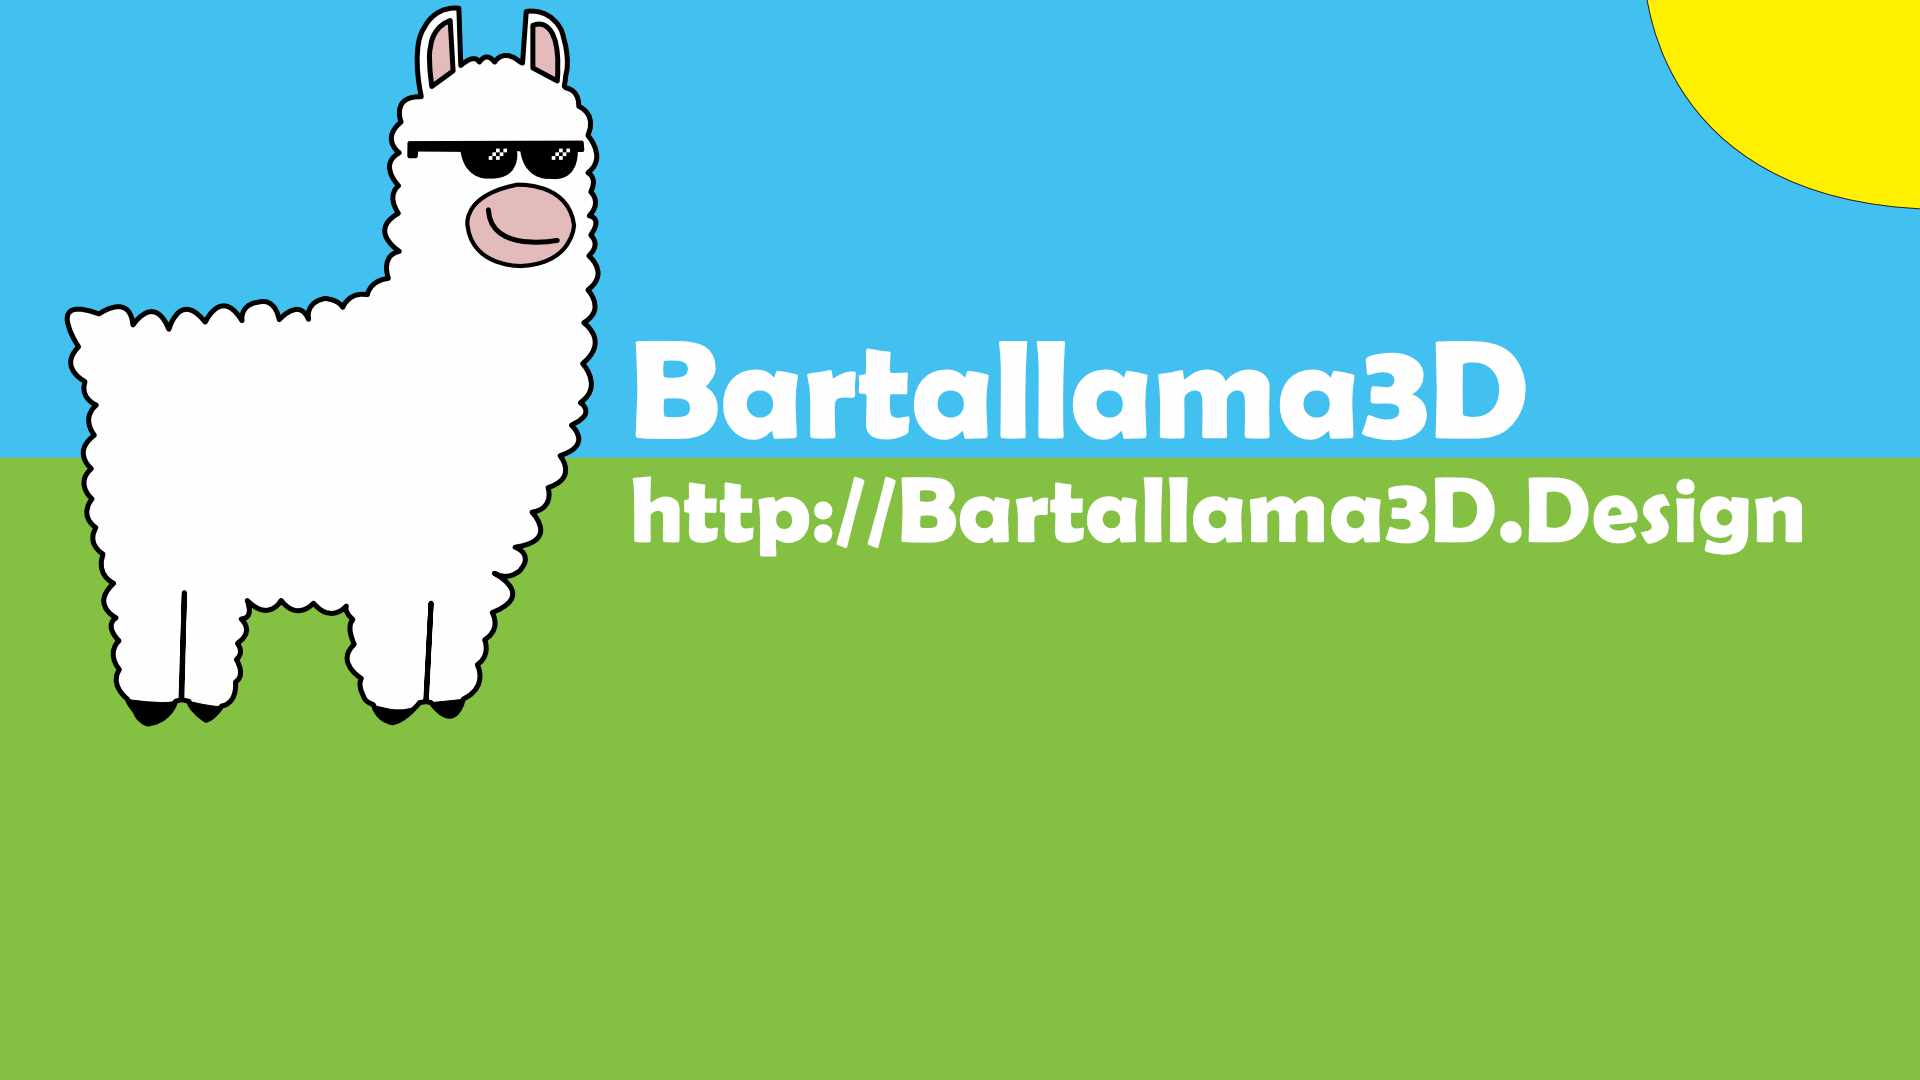 Our Logo featuring our llama that says Bartallama3D and our website URL https://Bartallama3D.design